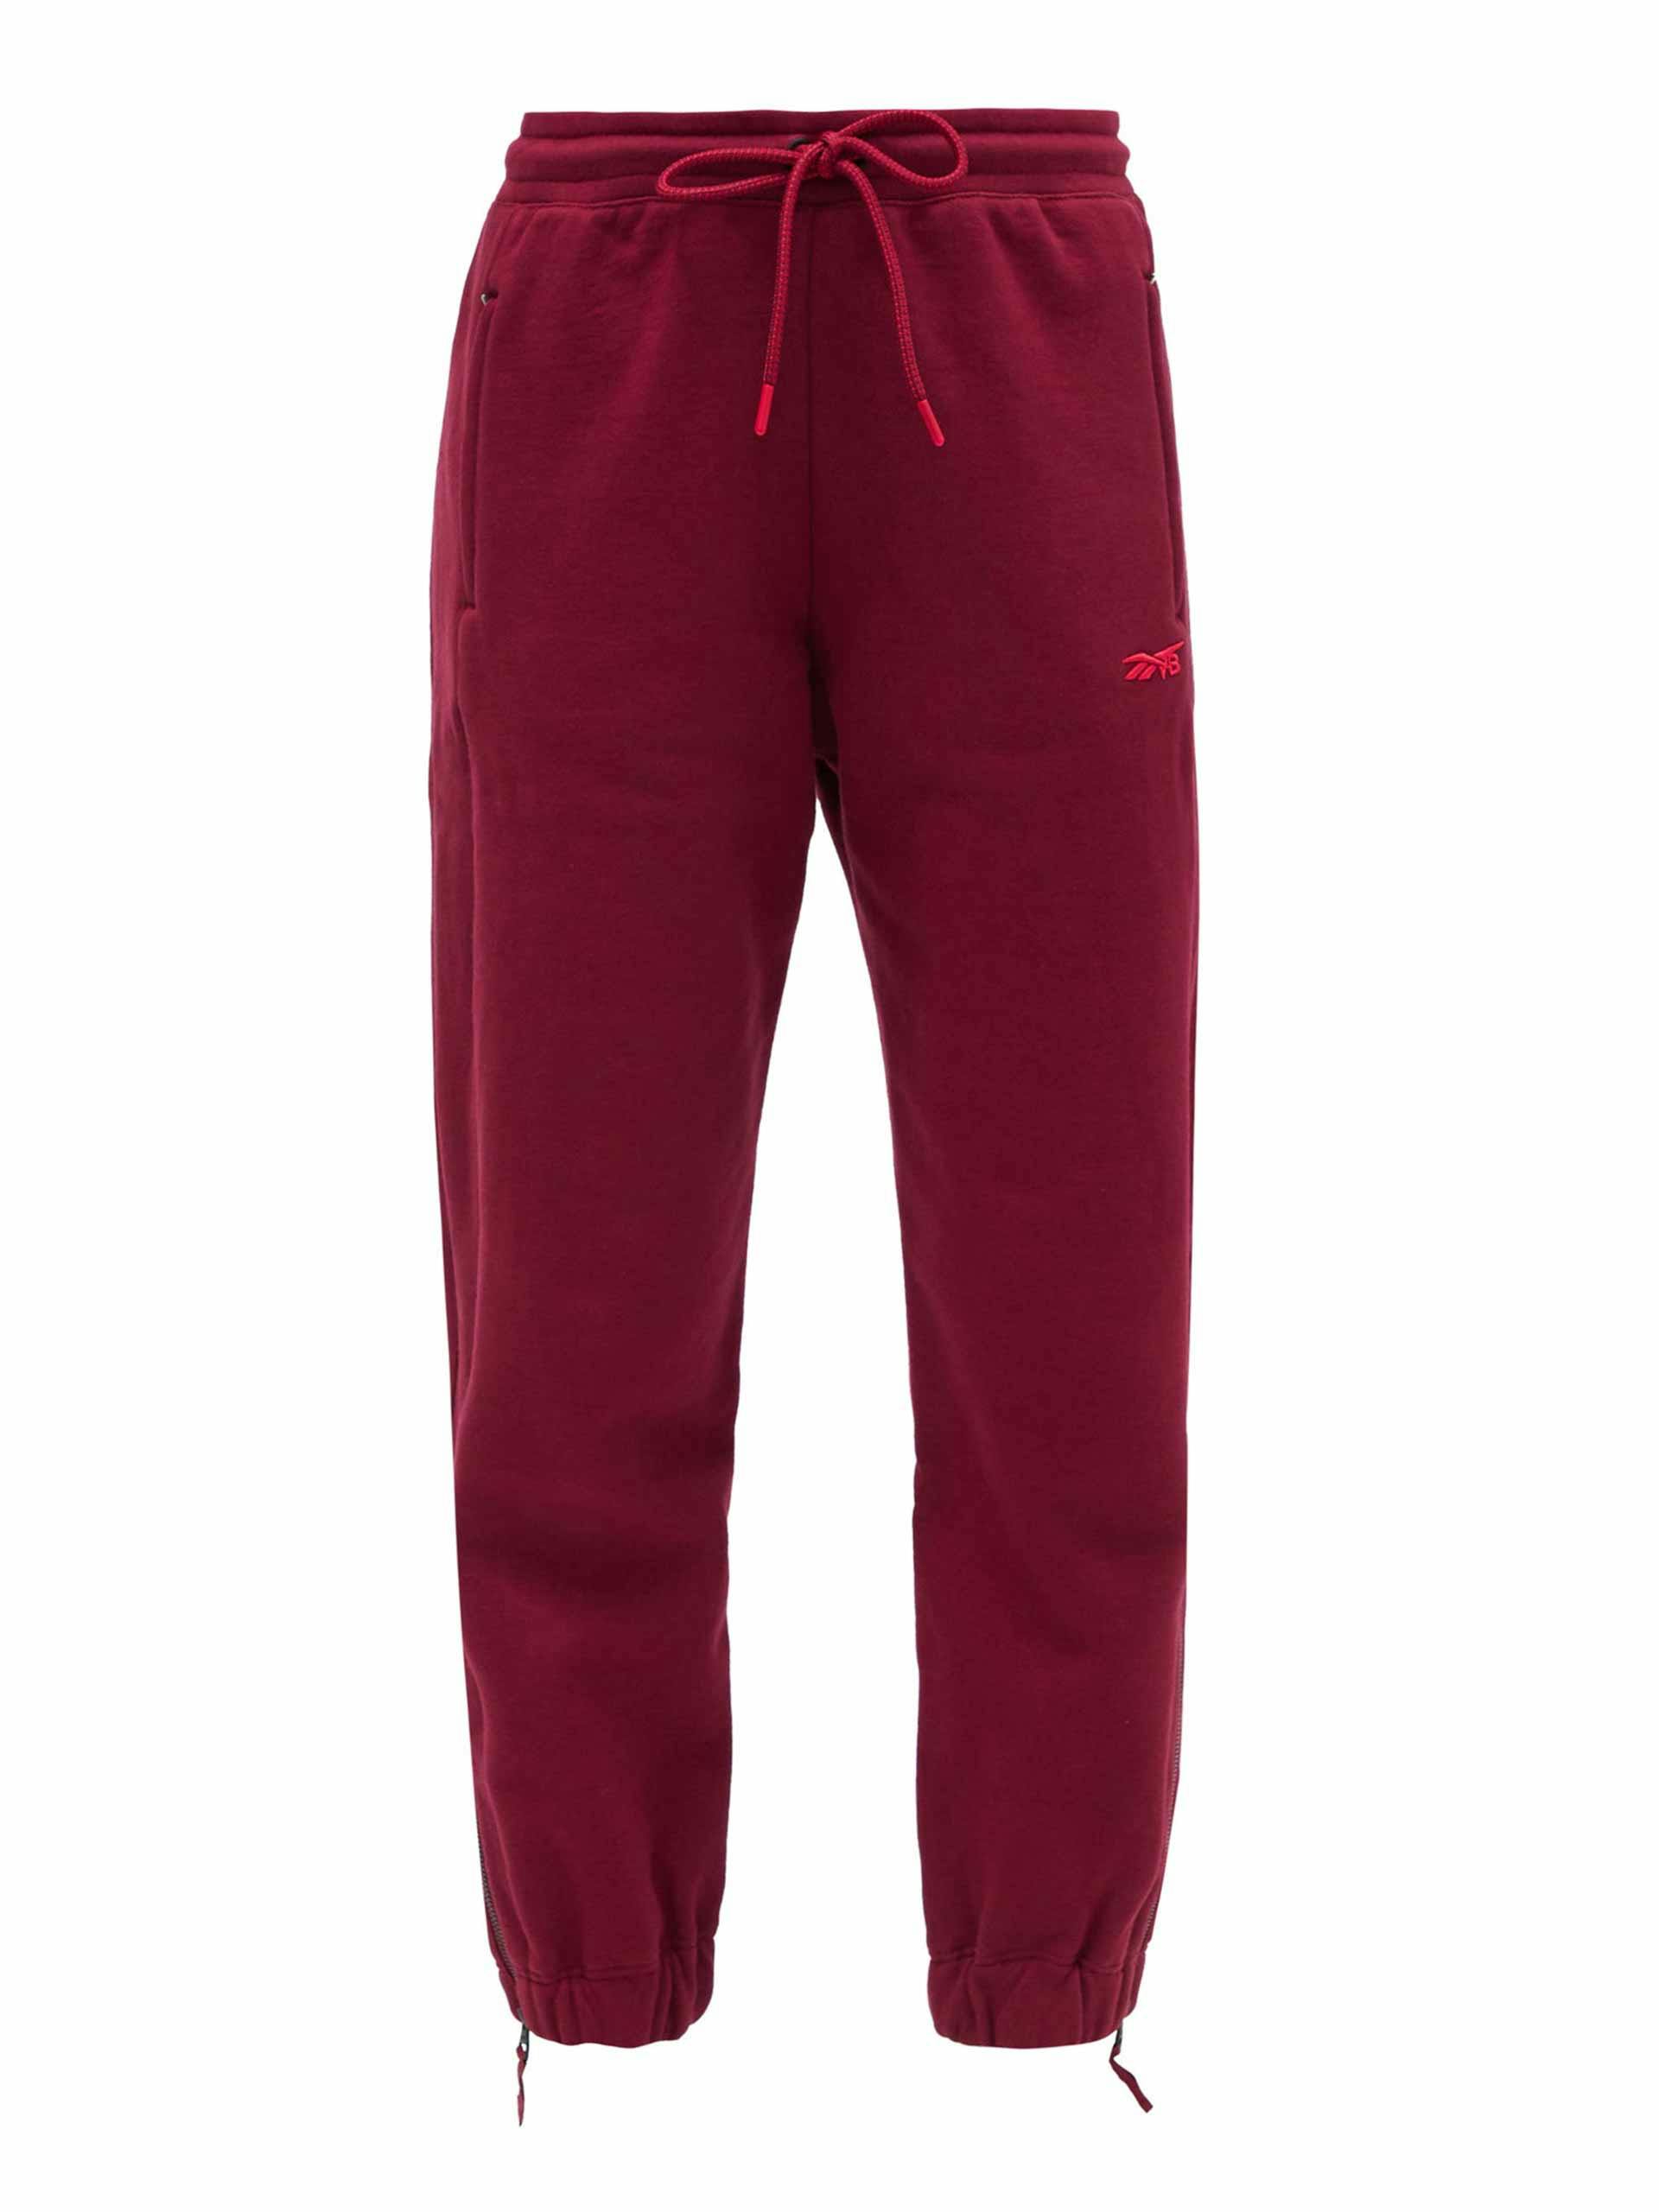 Red drawstring waist cotton track pants